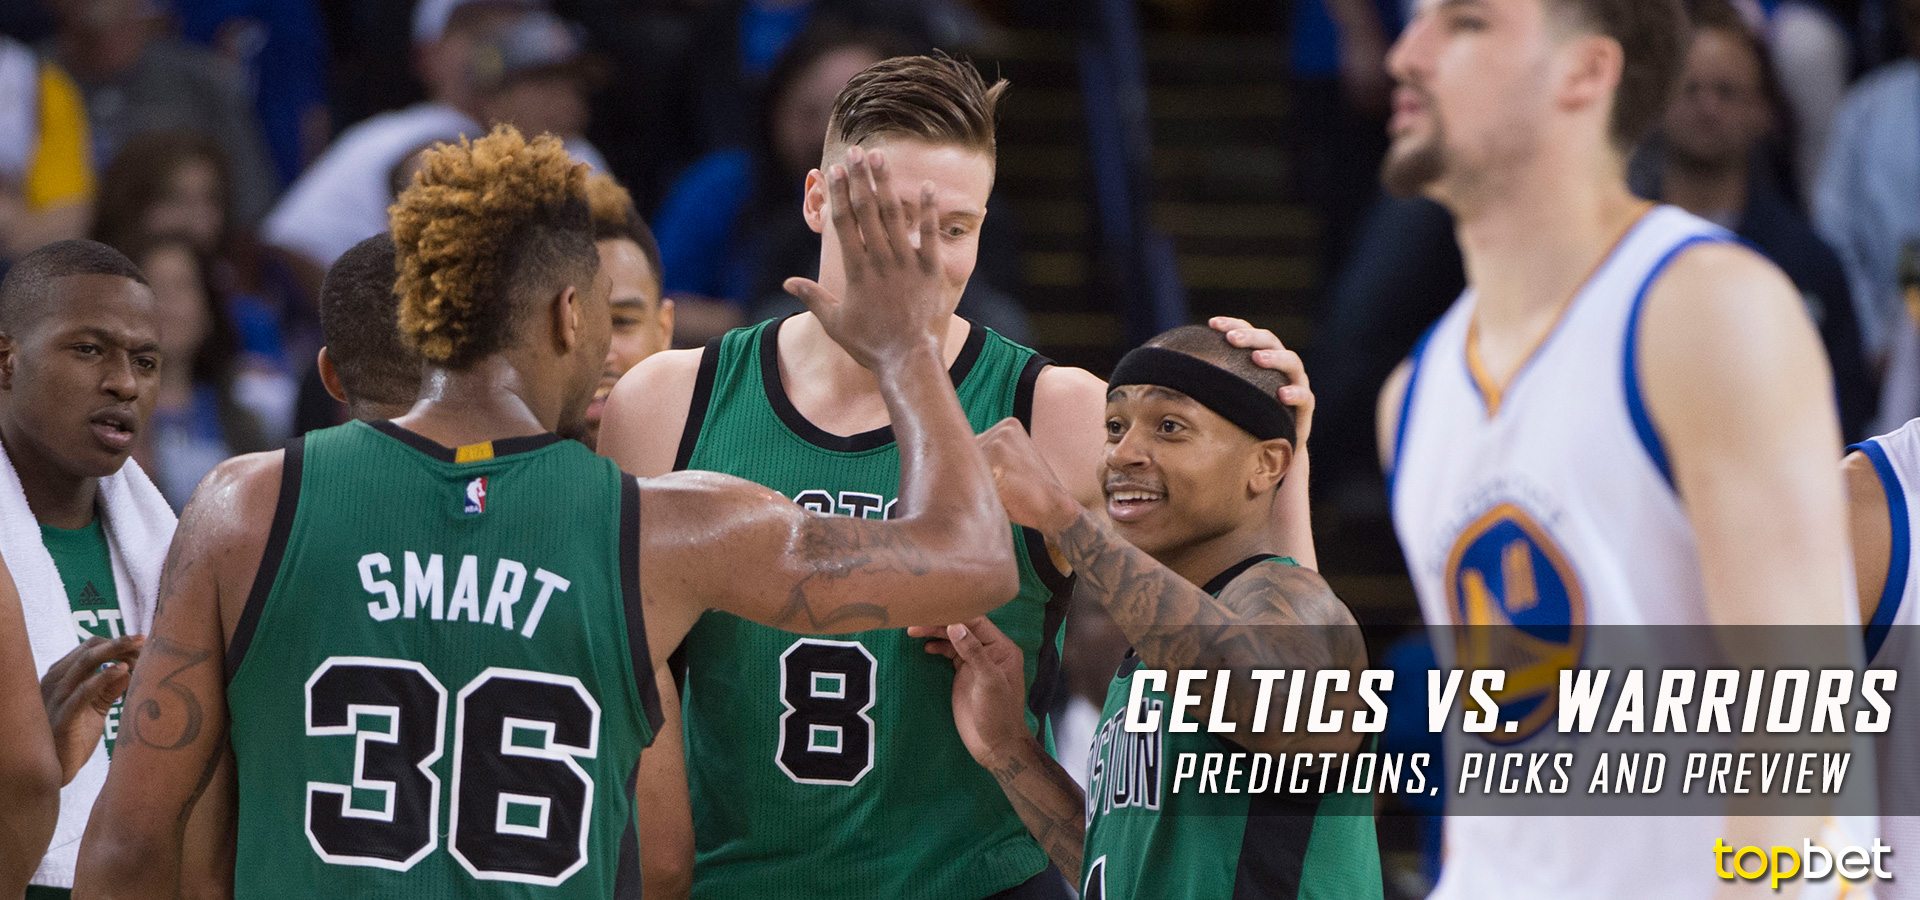 Celtics vs Warriors Predictions, Odds & Preview March 2017